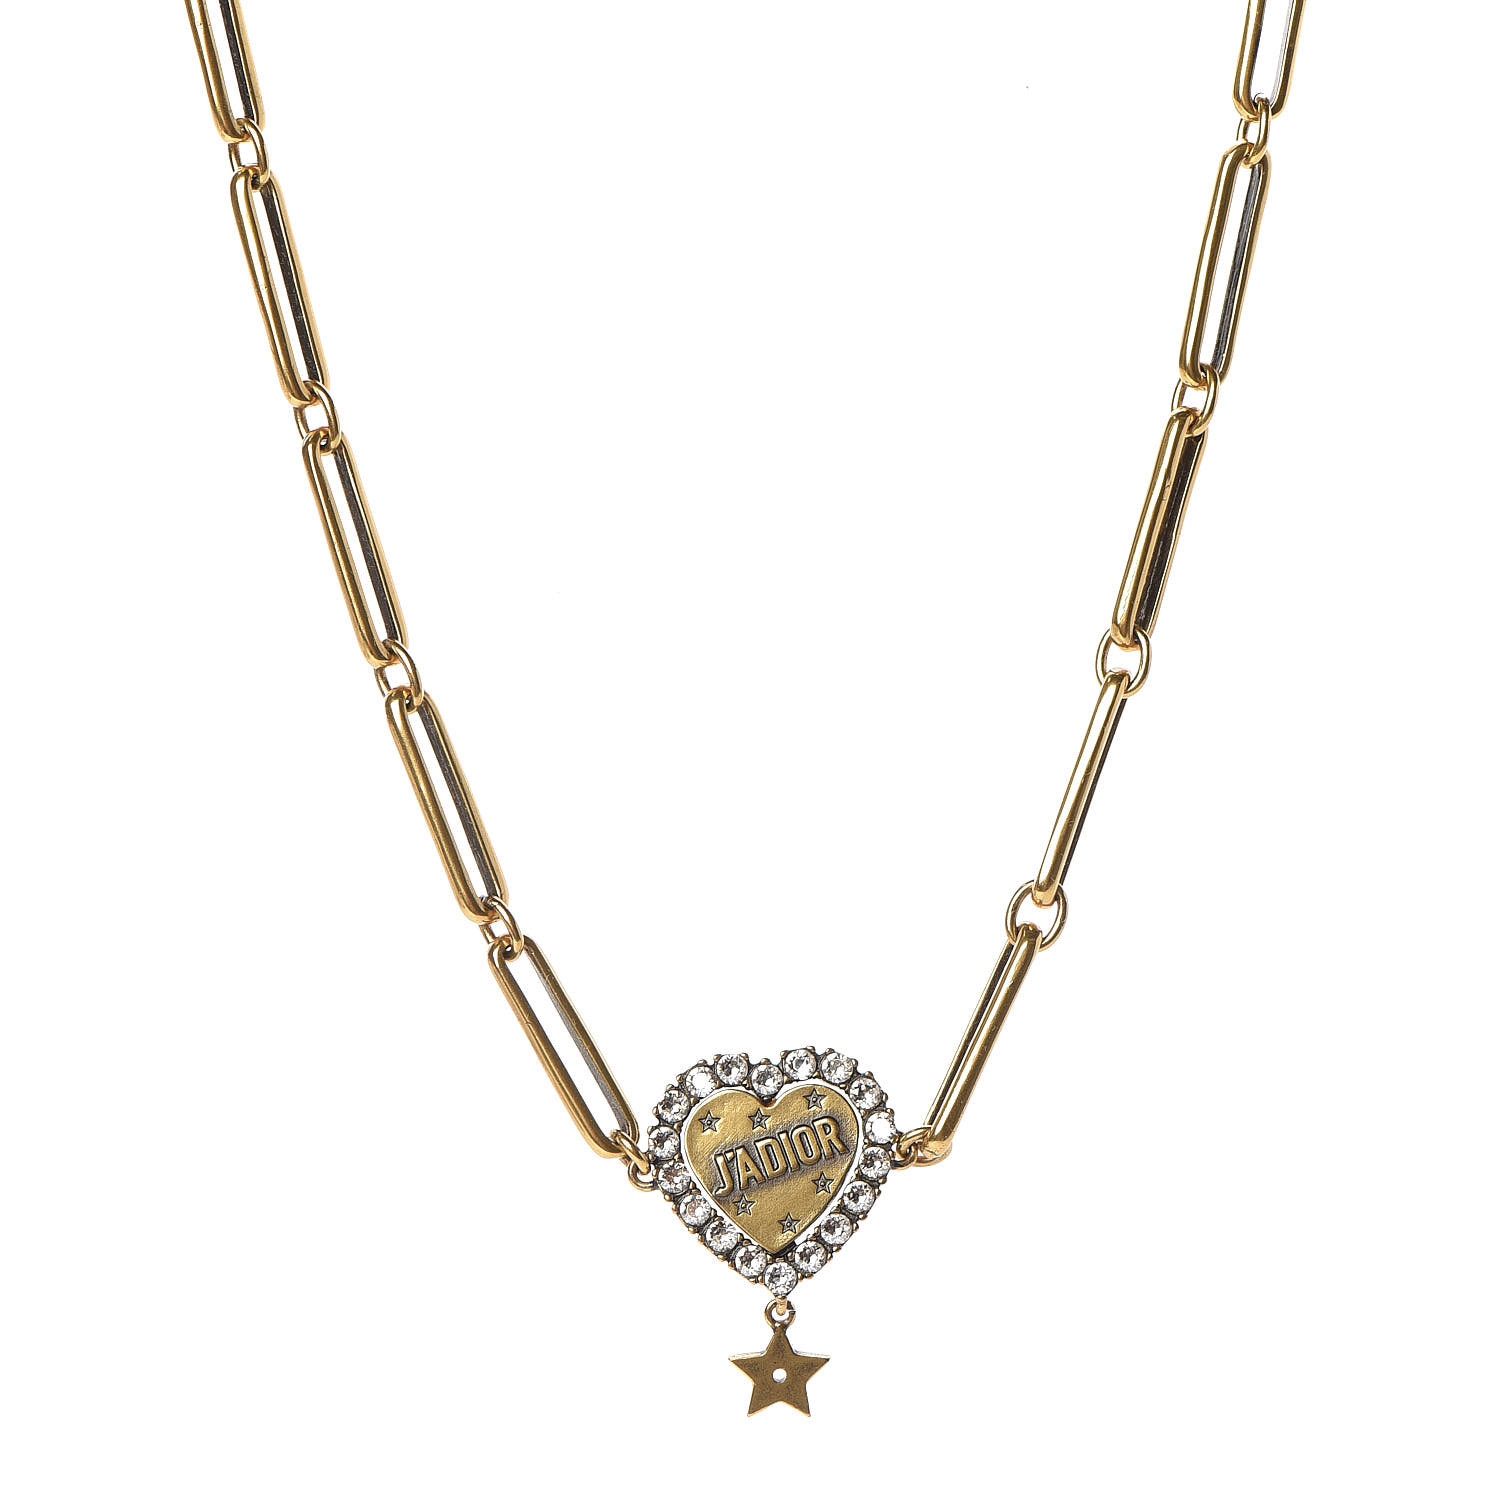 dior heart necklace